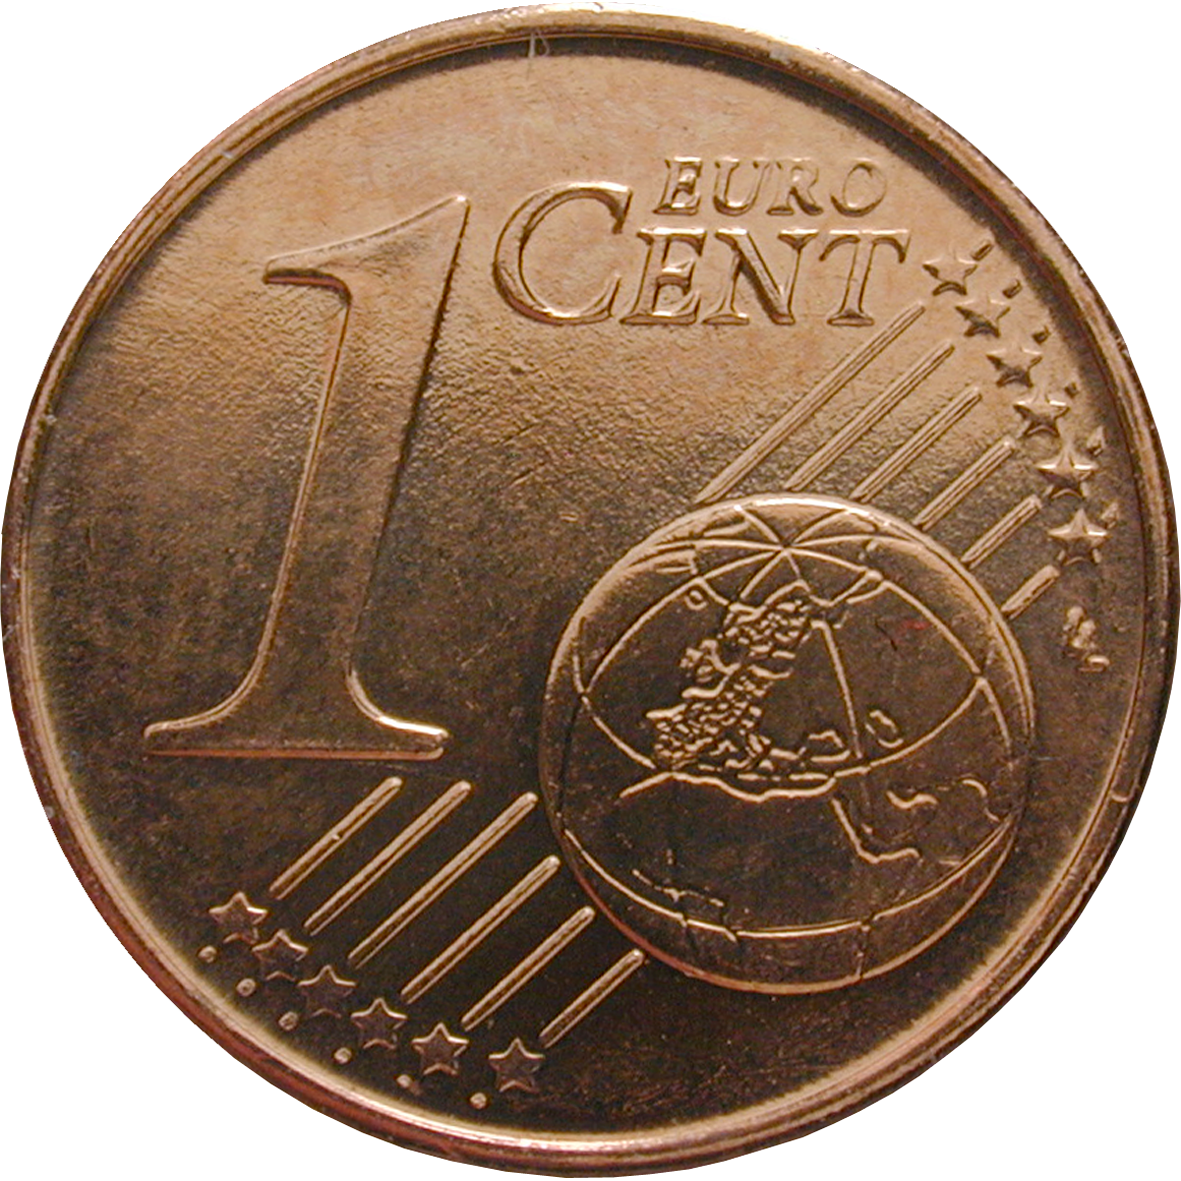 Republic of Greece, 1 Euro Cent 2002 (obverse)